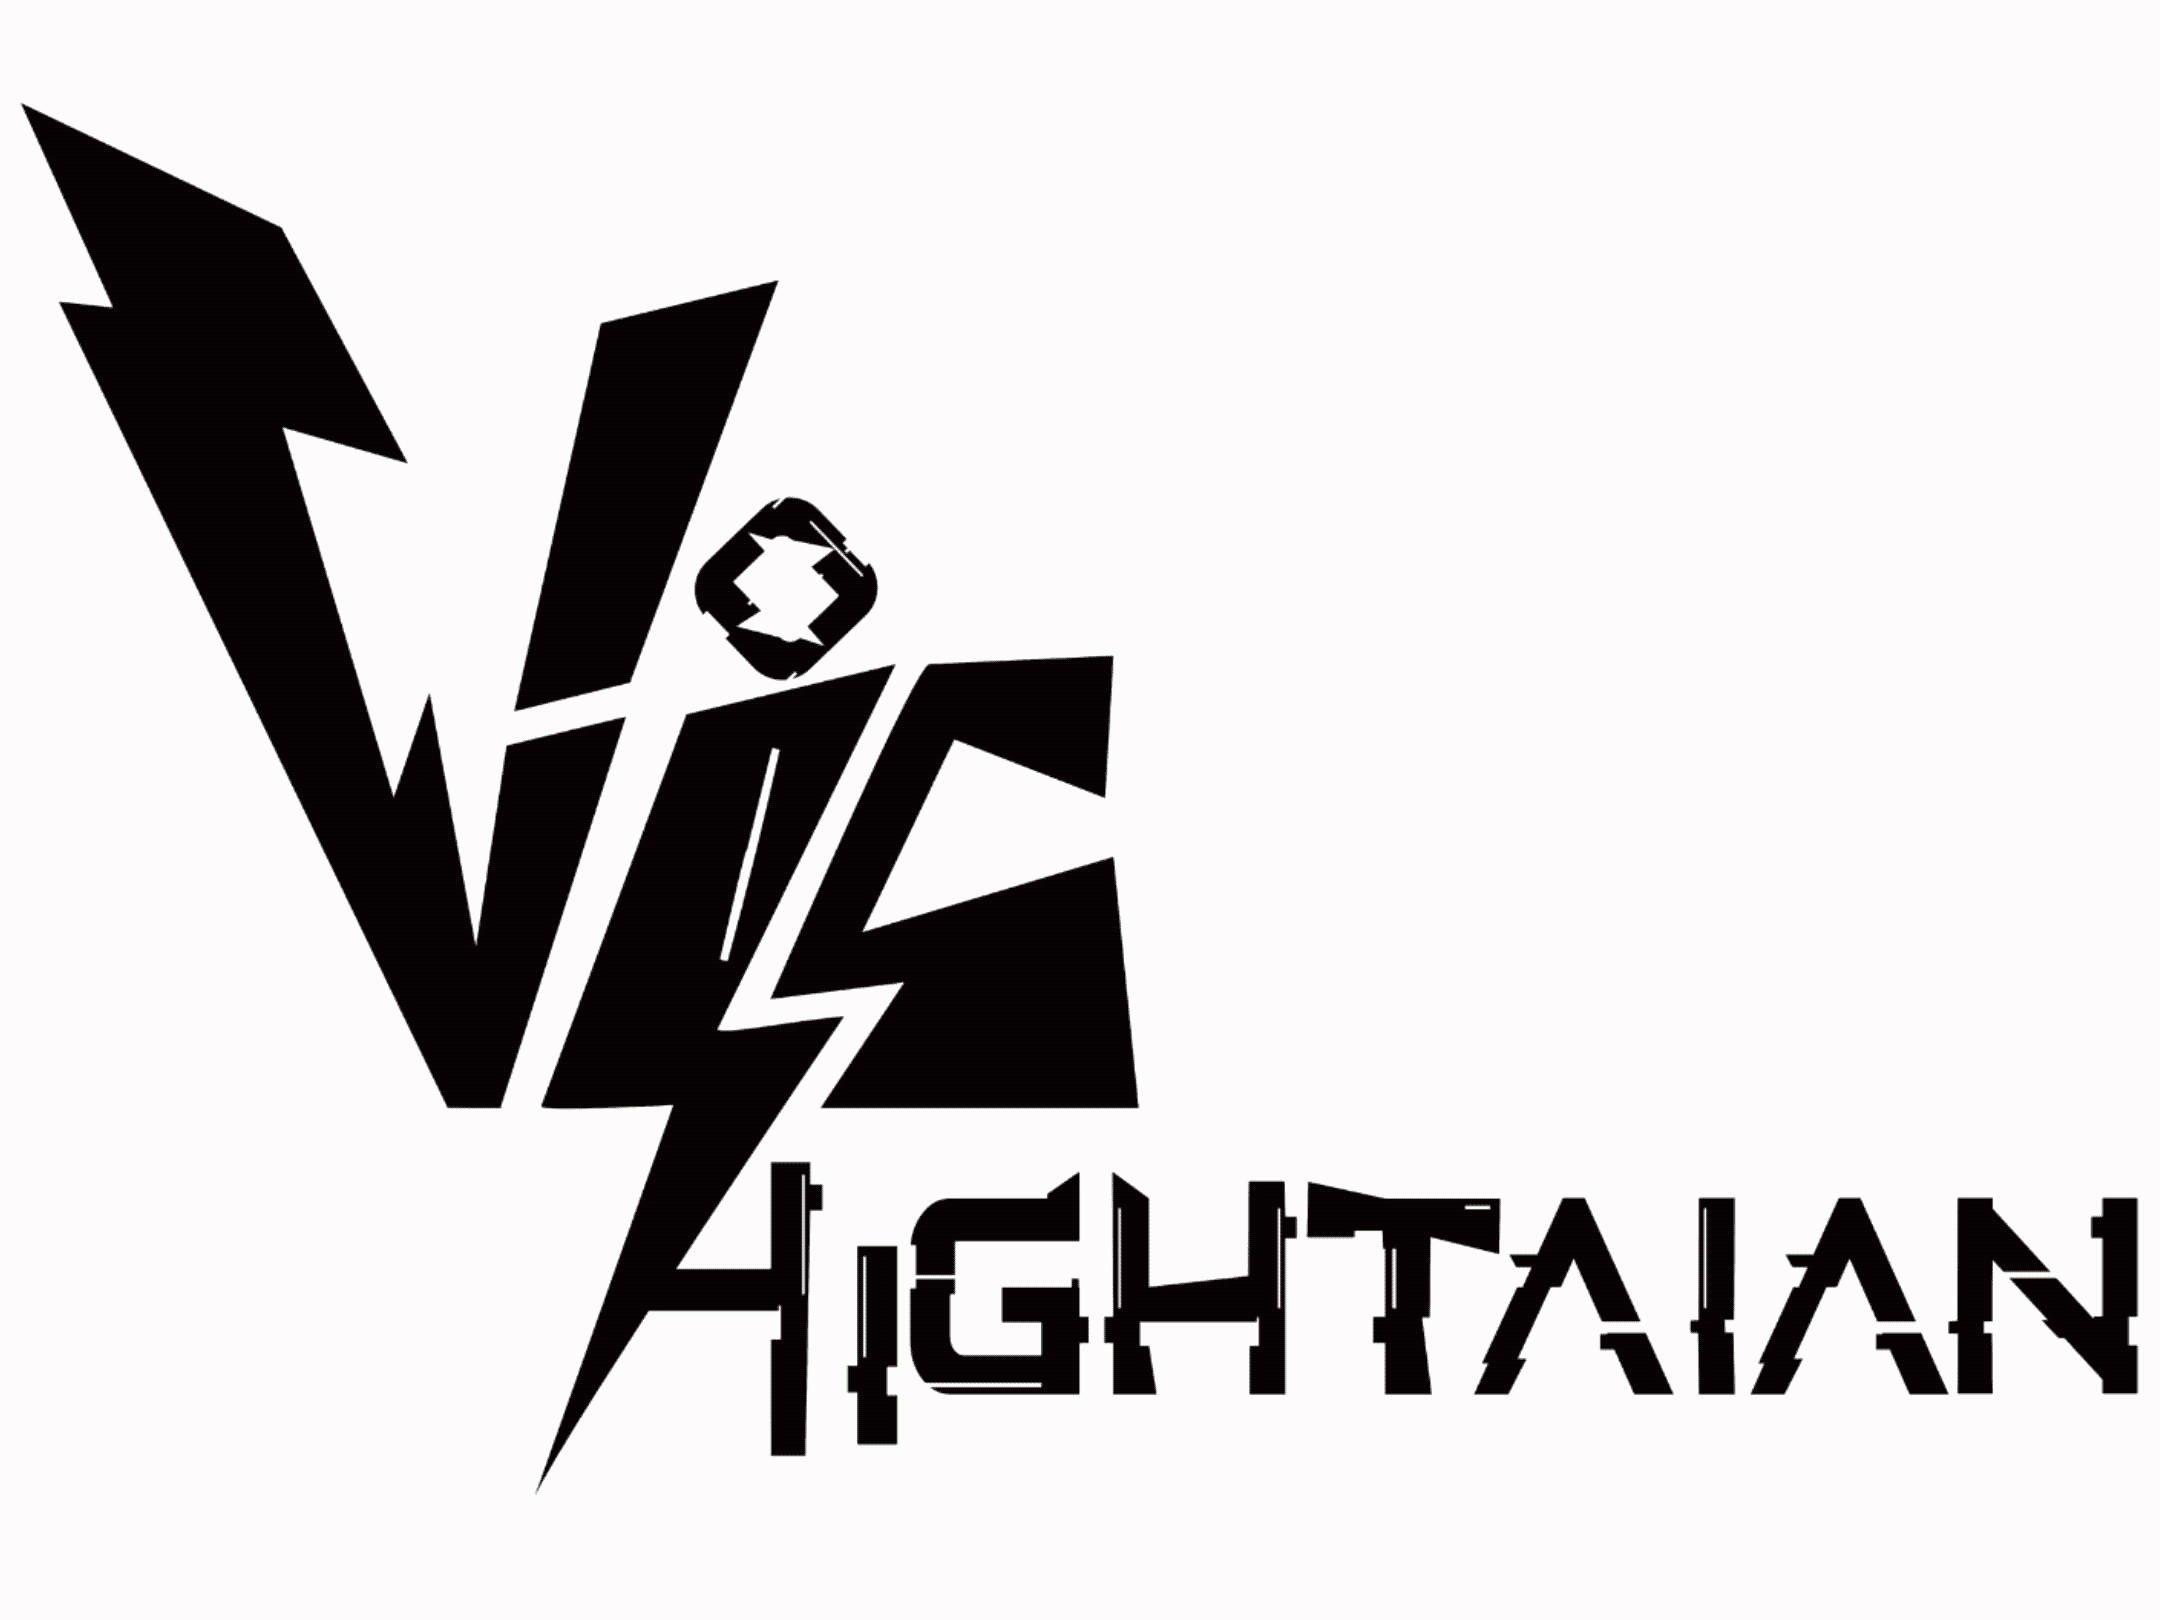 Vic Hightaian